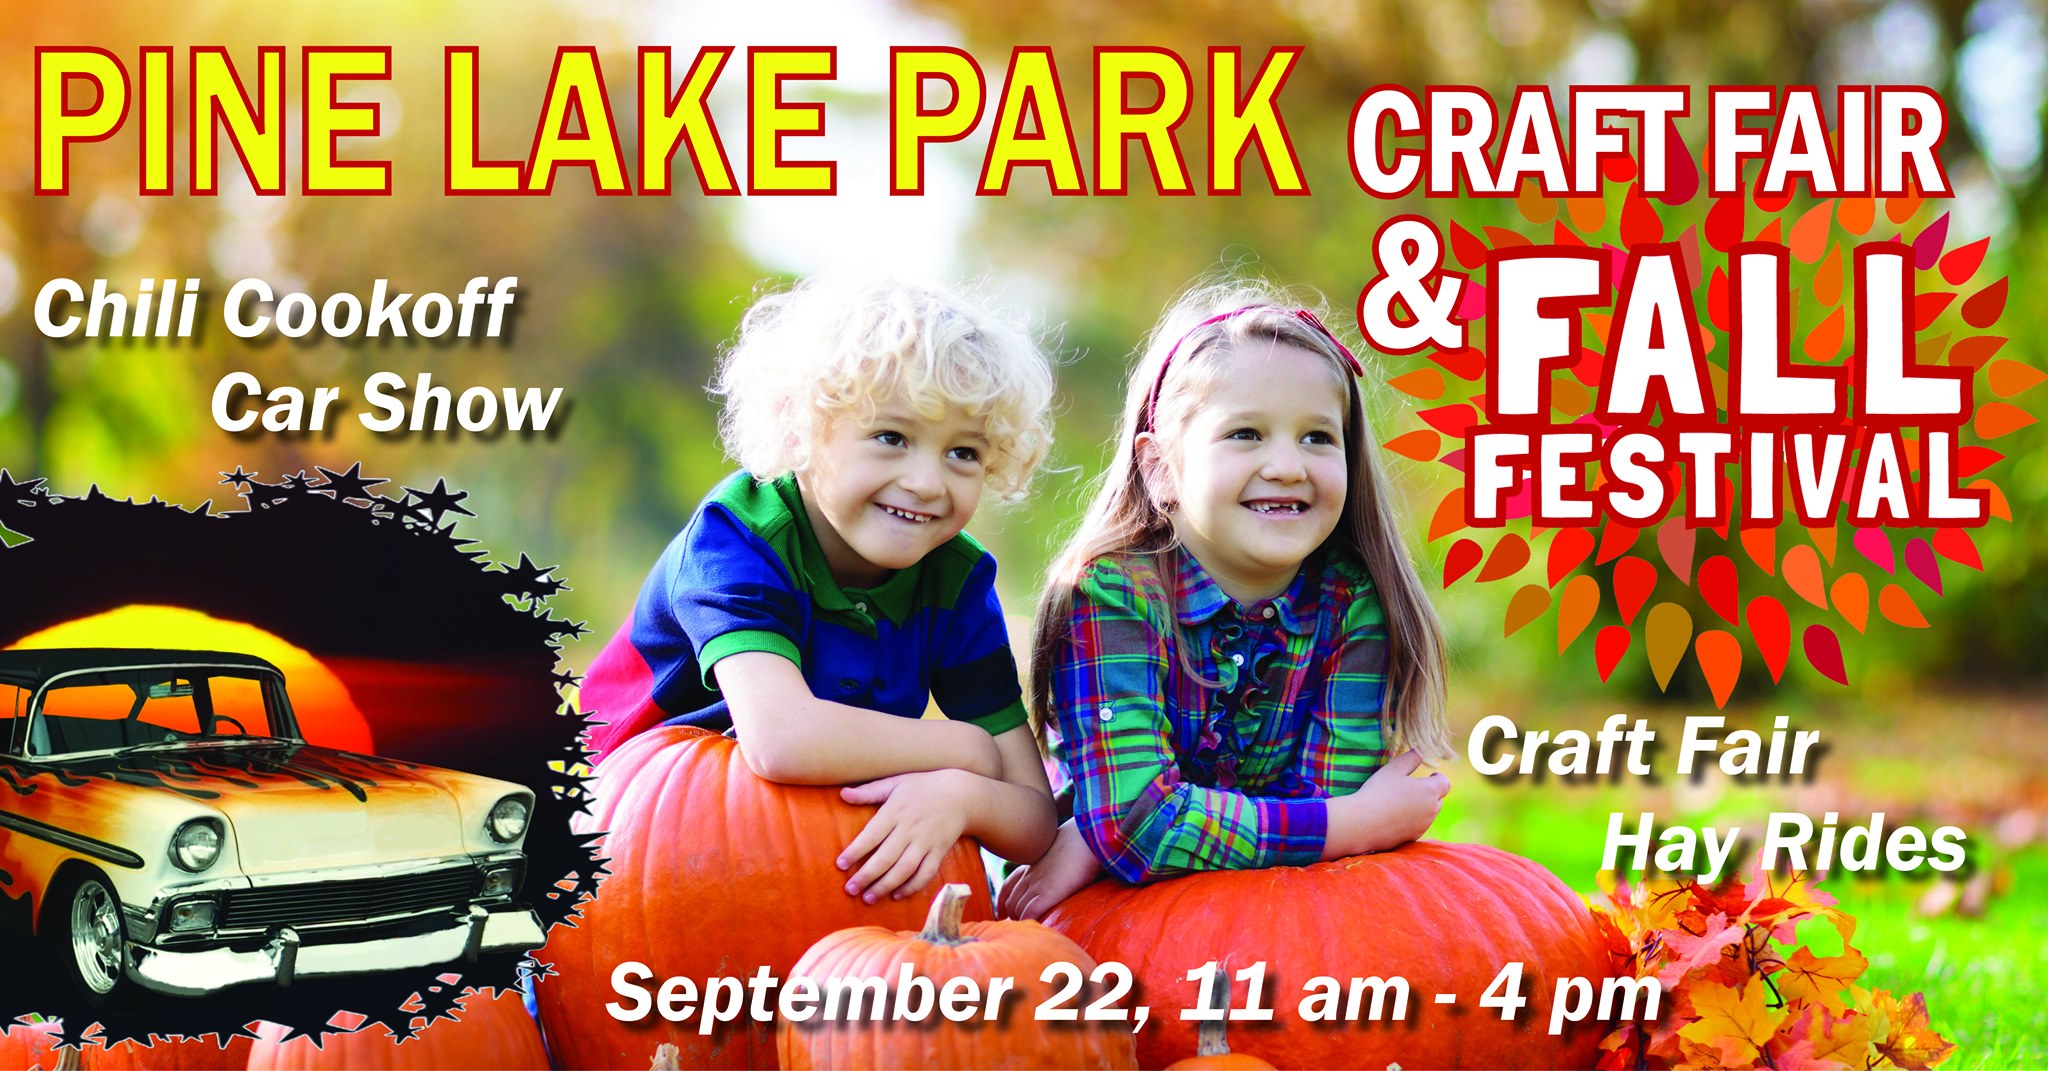 Pine Lake Park Craft Fair & Fall Festival Car Show Apex Automotive